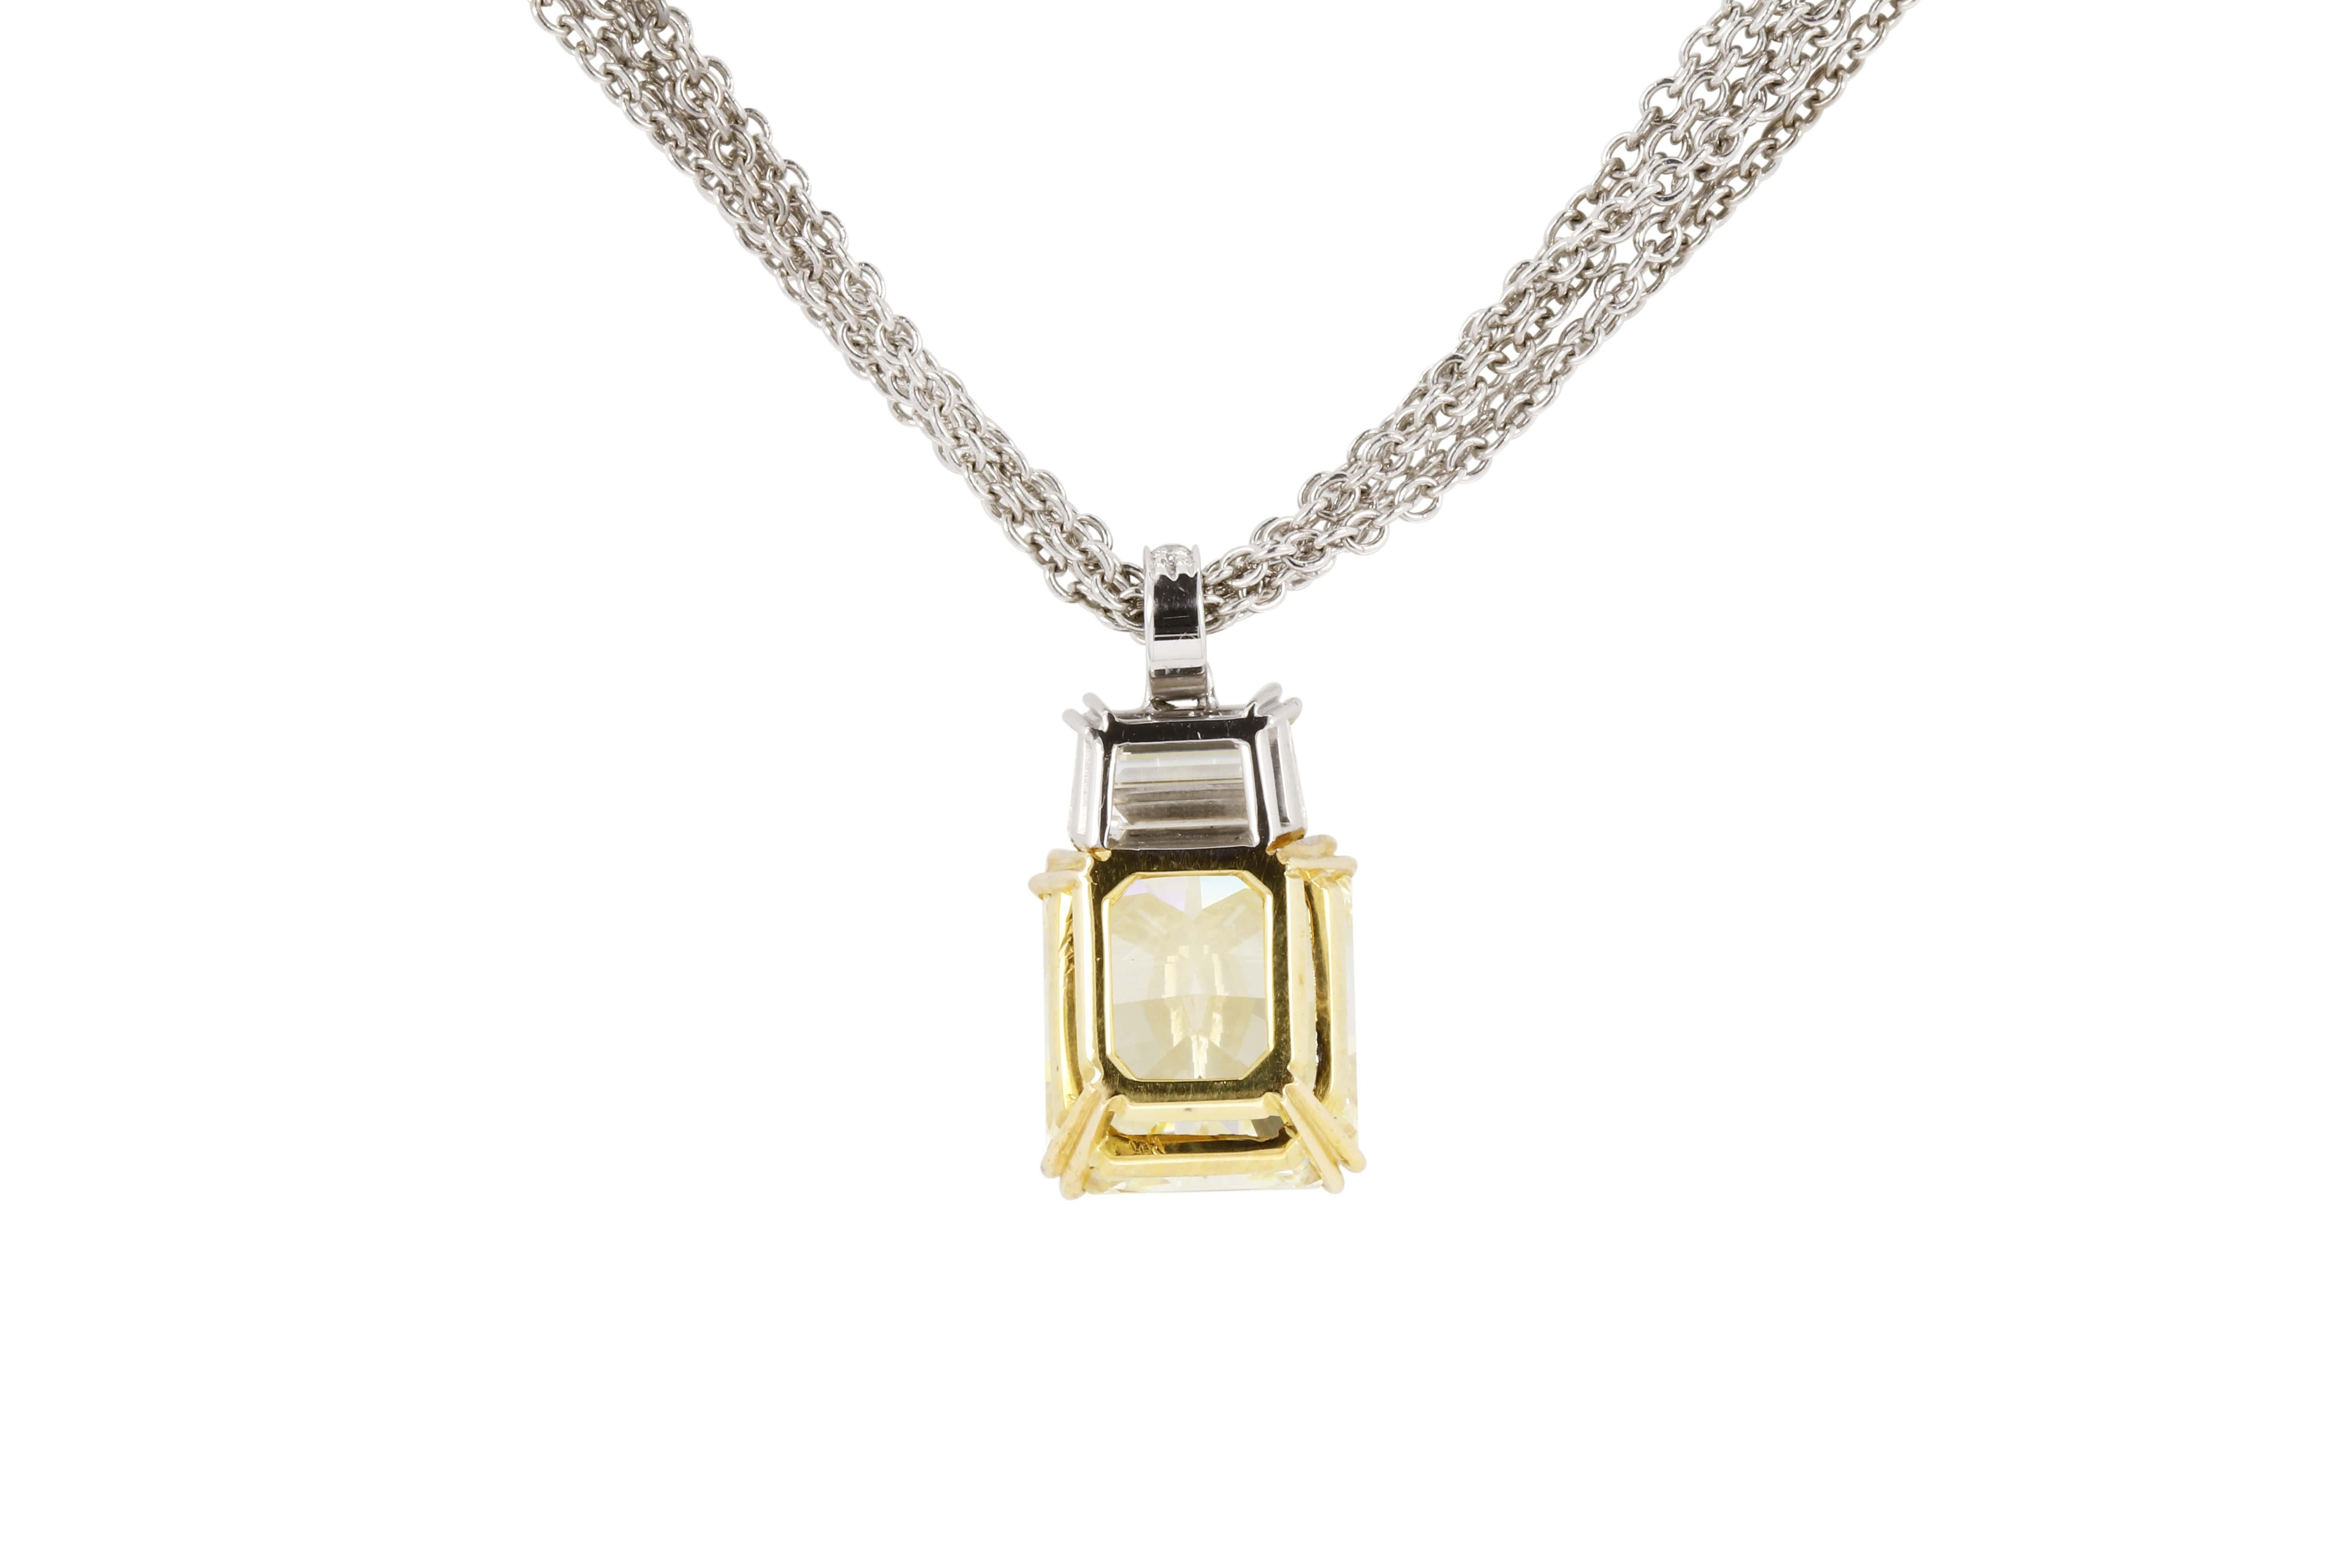 Radiant Cut GIA Certified 8.34 Carat Fancy Yellow Internally Flawless Diamond Pendant For Sale